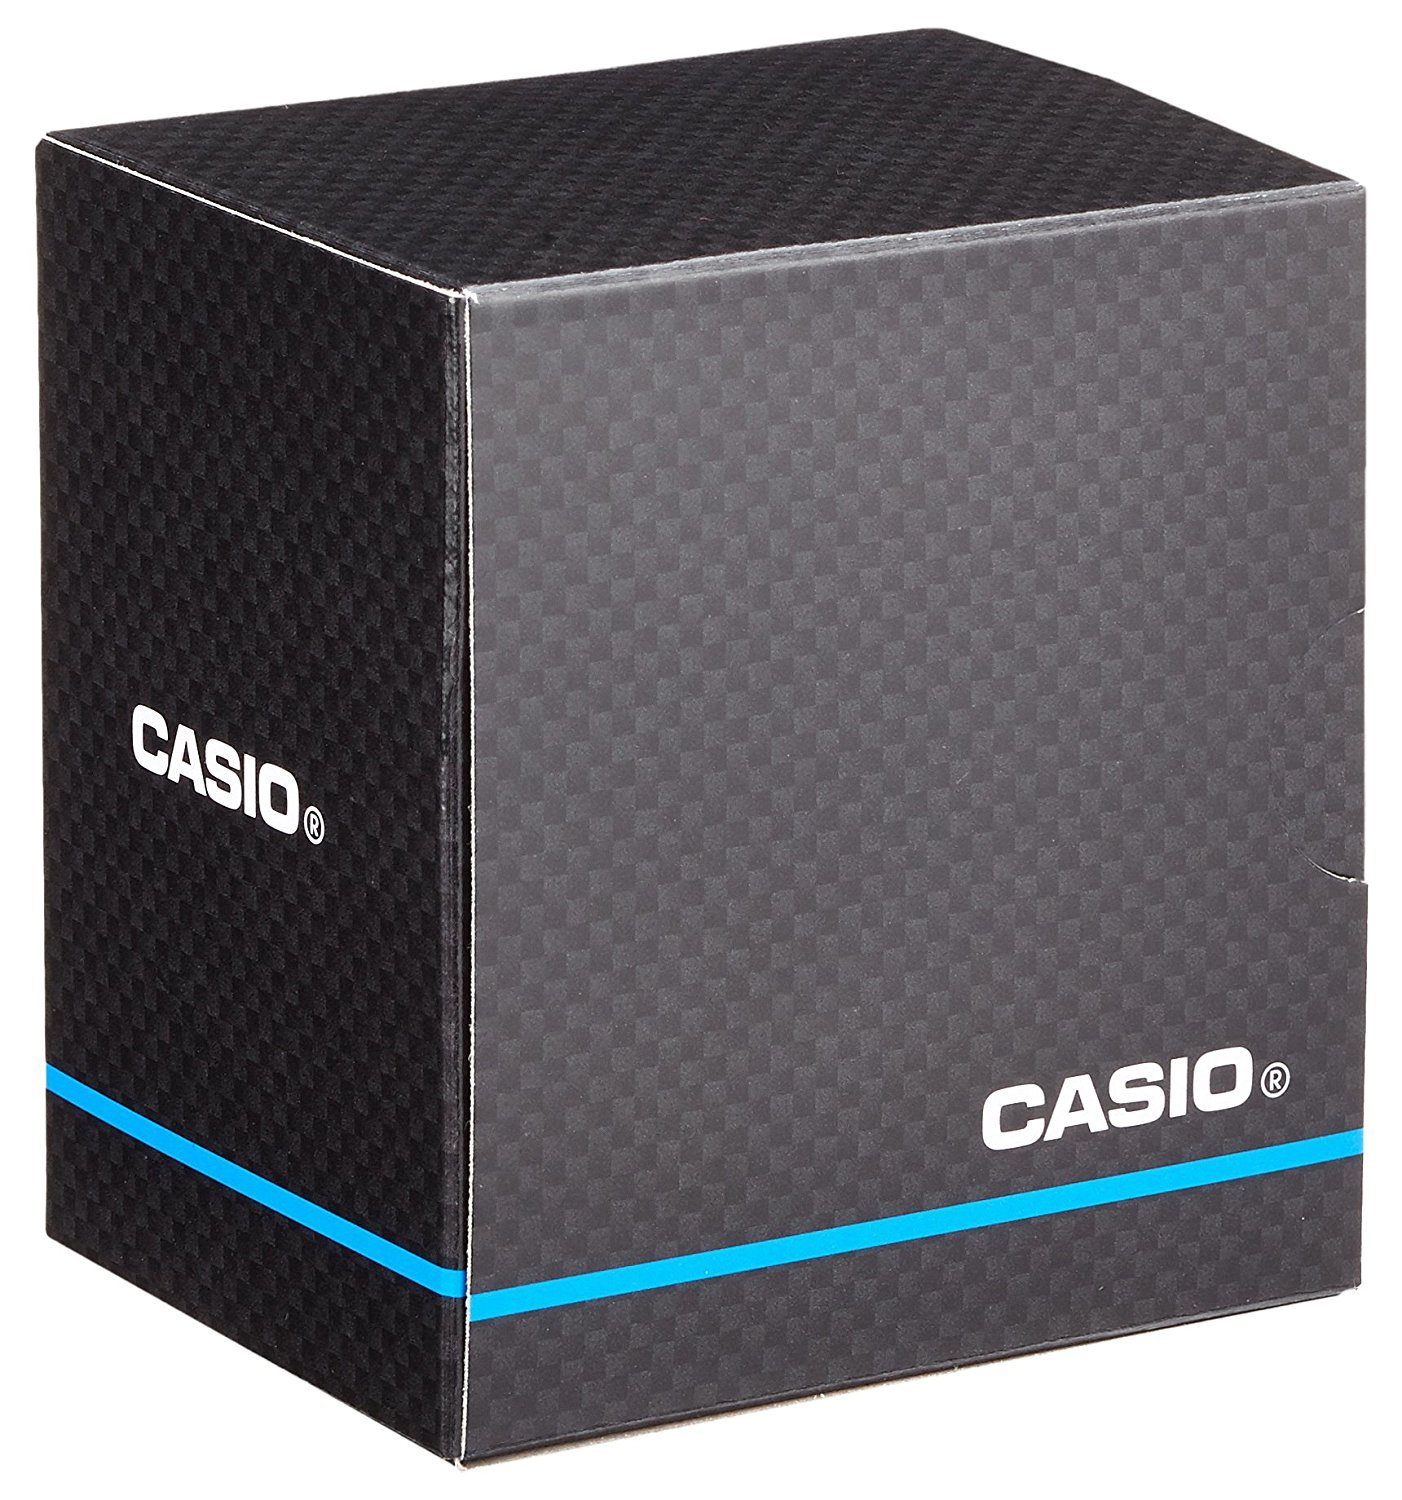 Casio Collection Unisex Watch DBC-32D